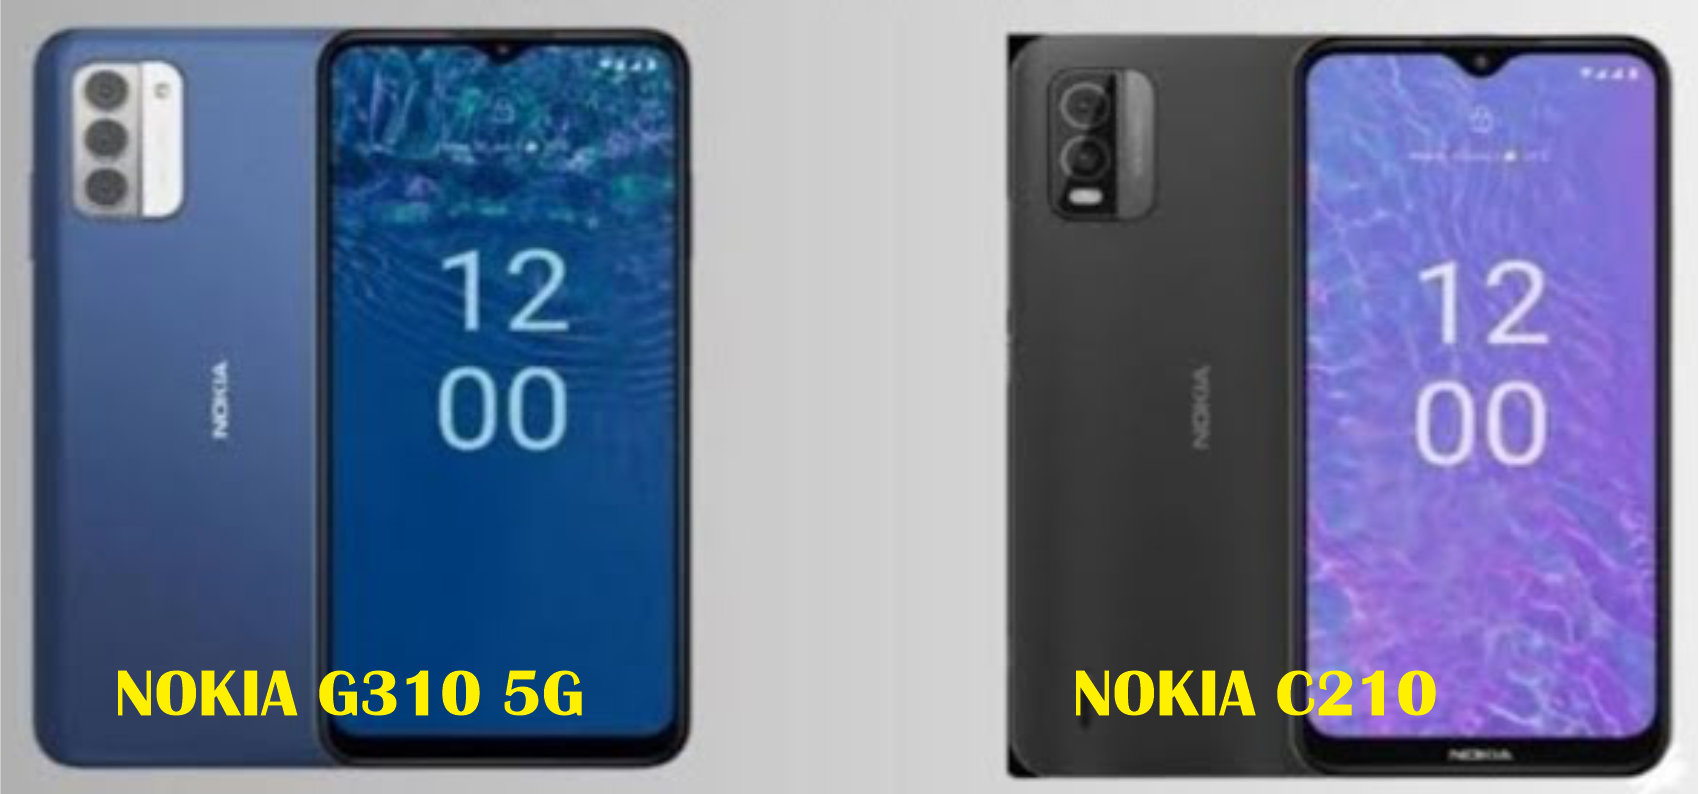 Luncurkan 2 HP Murah, Inilah Nokia Android Terbaru Harganya Cuma 1 - 2 Jutaan!